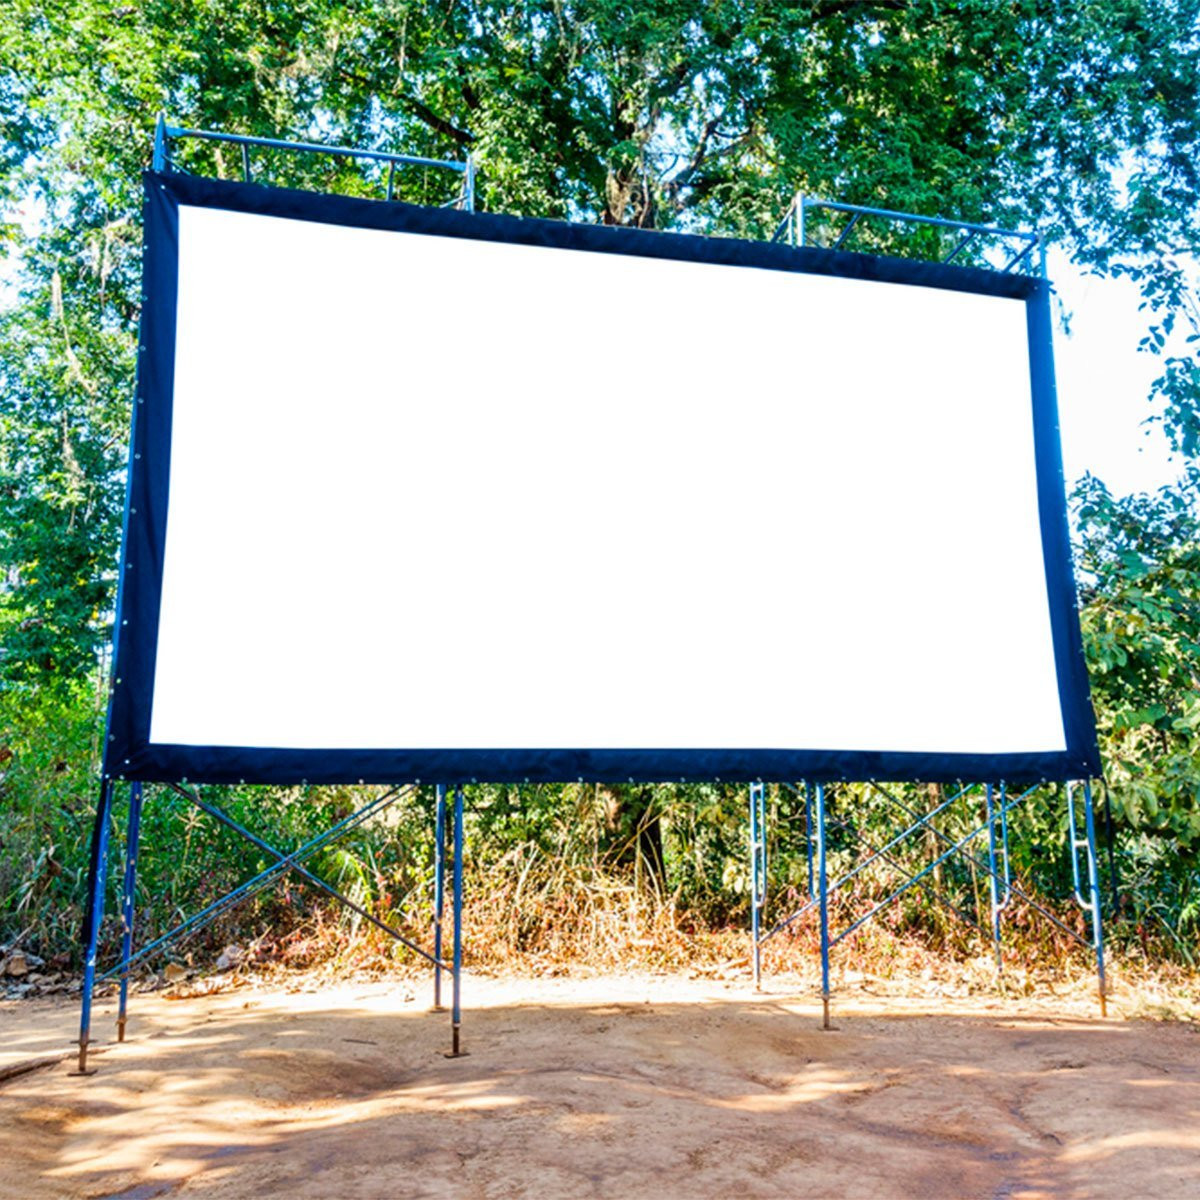 Diy Backyard Movie Screen
 What You Need for a DIY Backyard Movie Theater